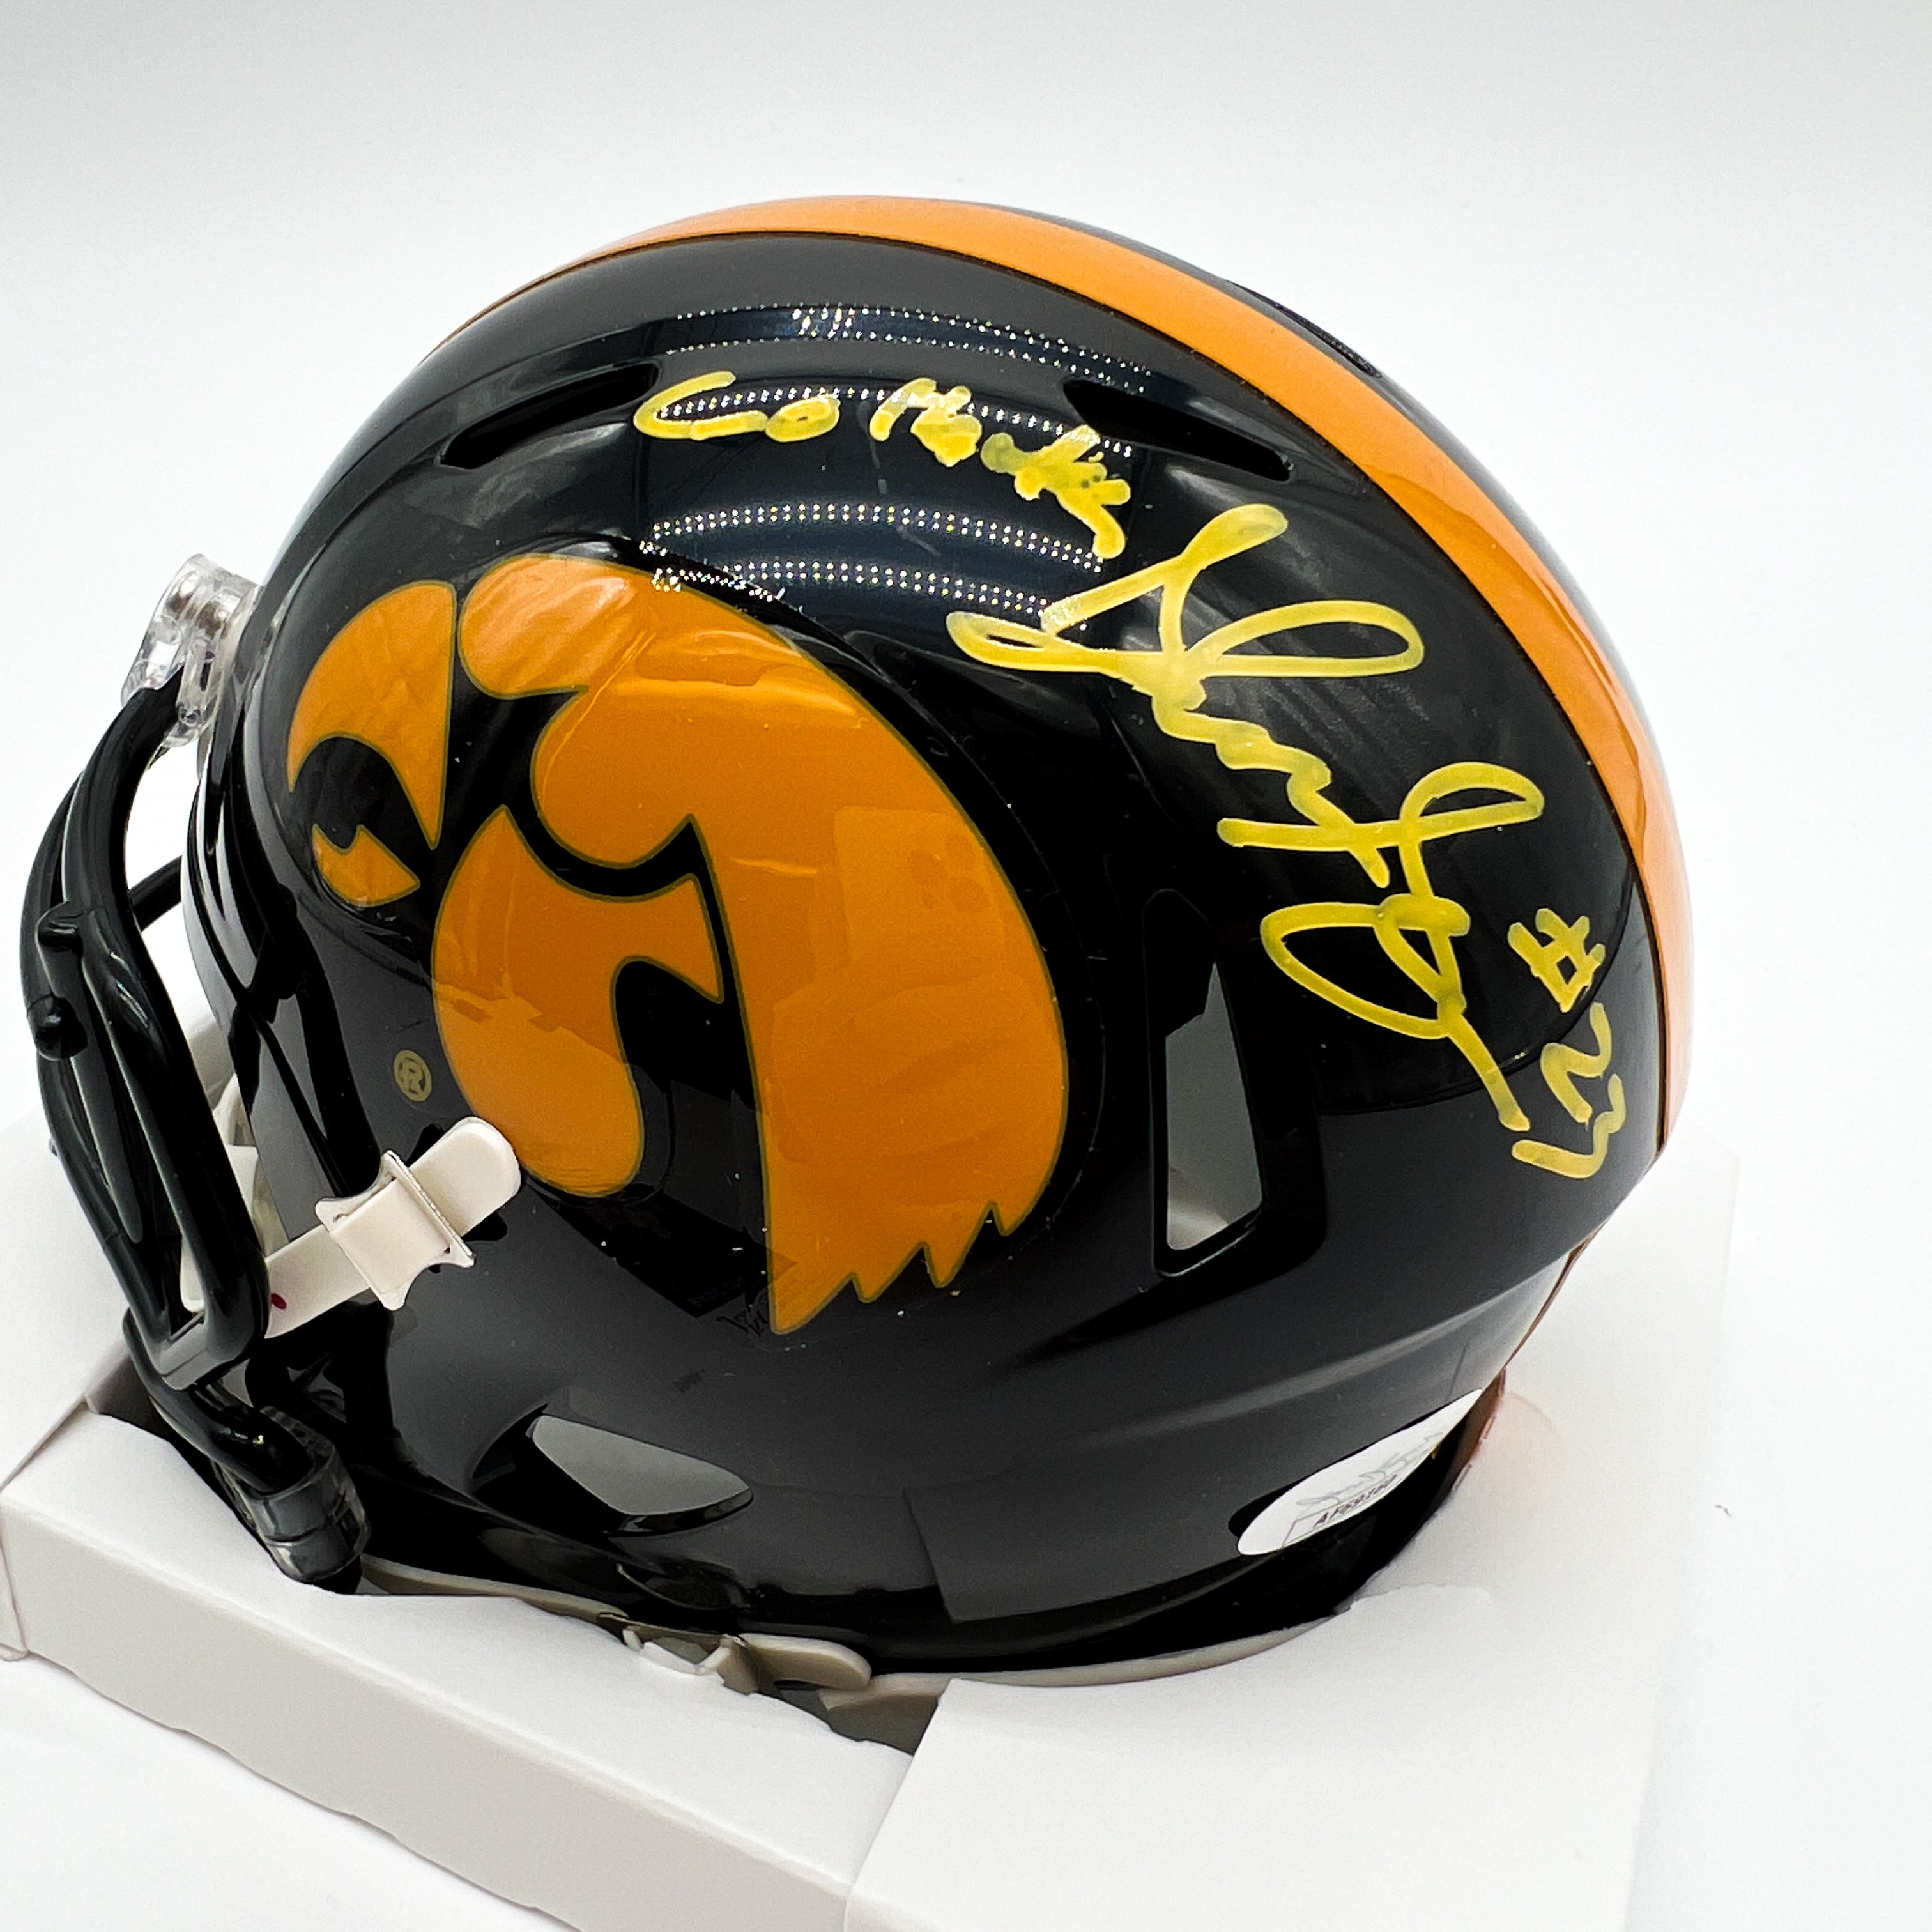 Shonn Greene Iowa Hakeyes Signed Mini Helmet Close Up